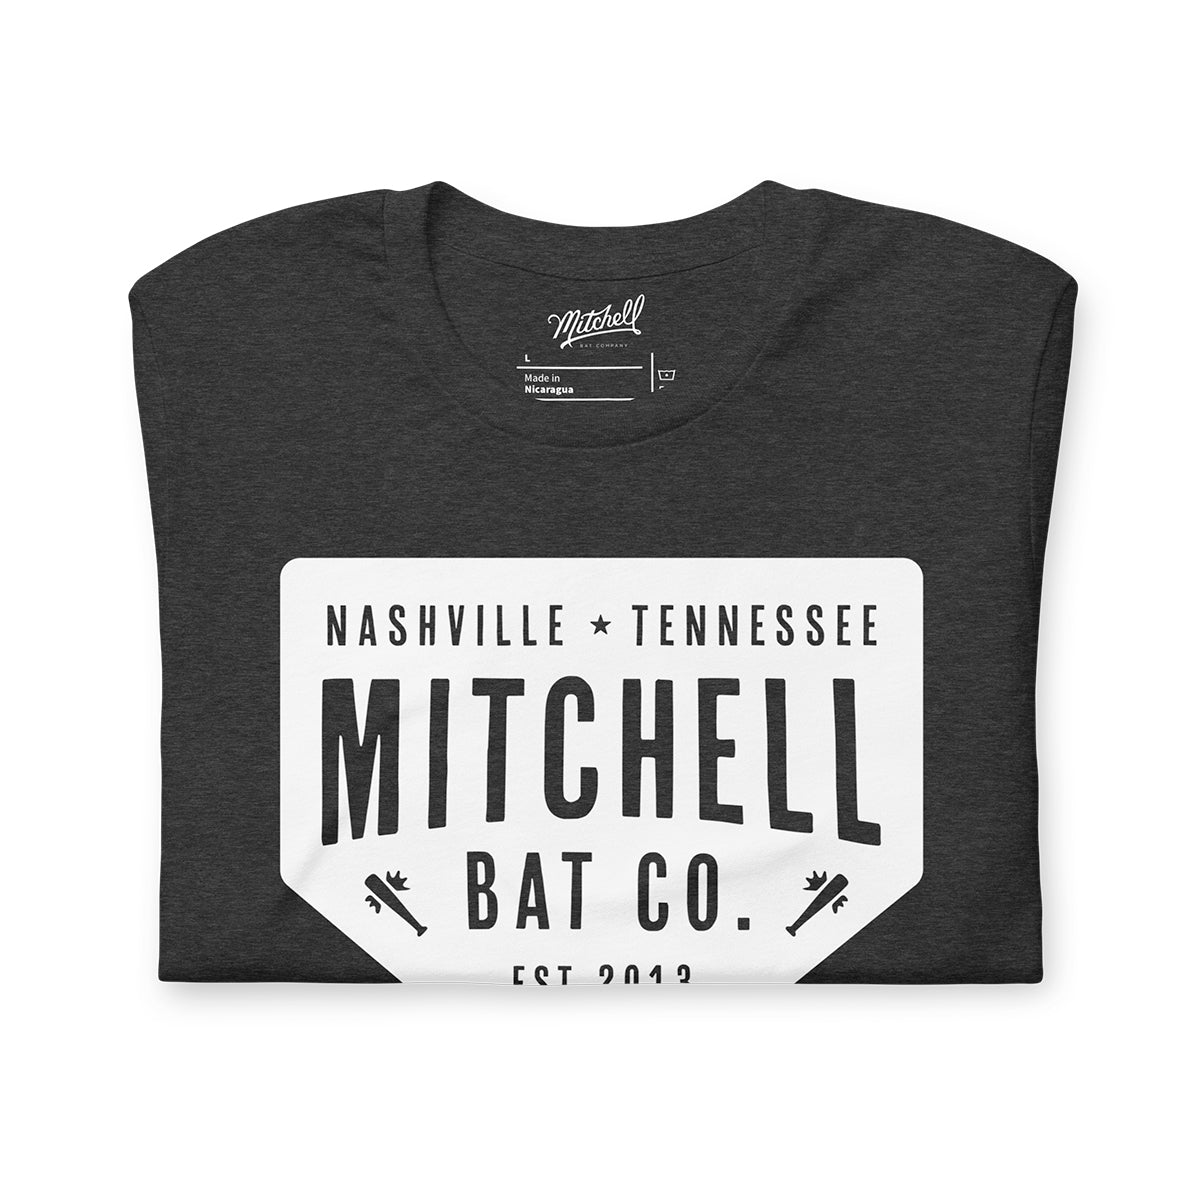 Home Plate Mitchell Bat Co Tee (dark gray)